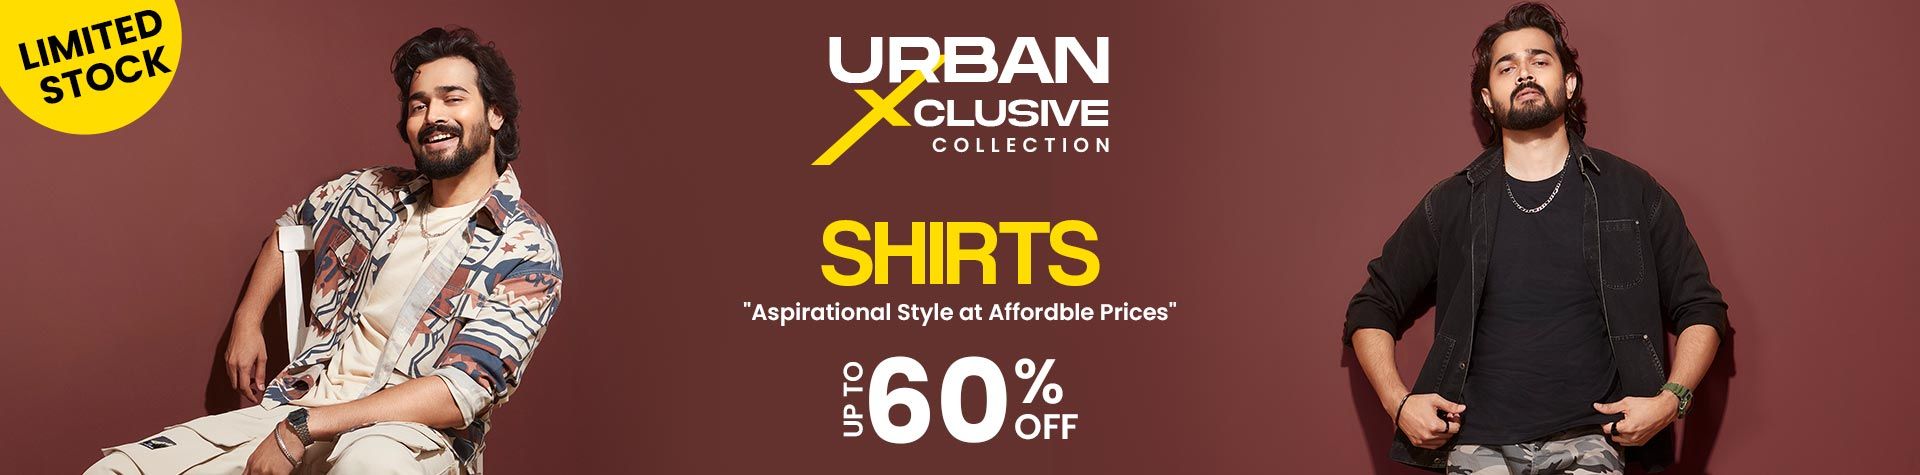 Urban Shirts